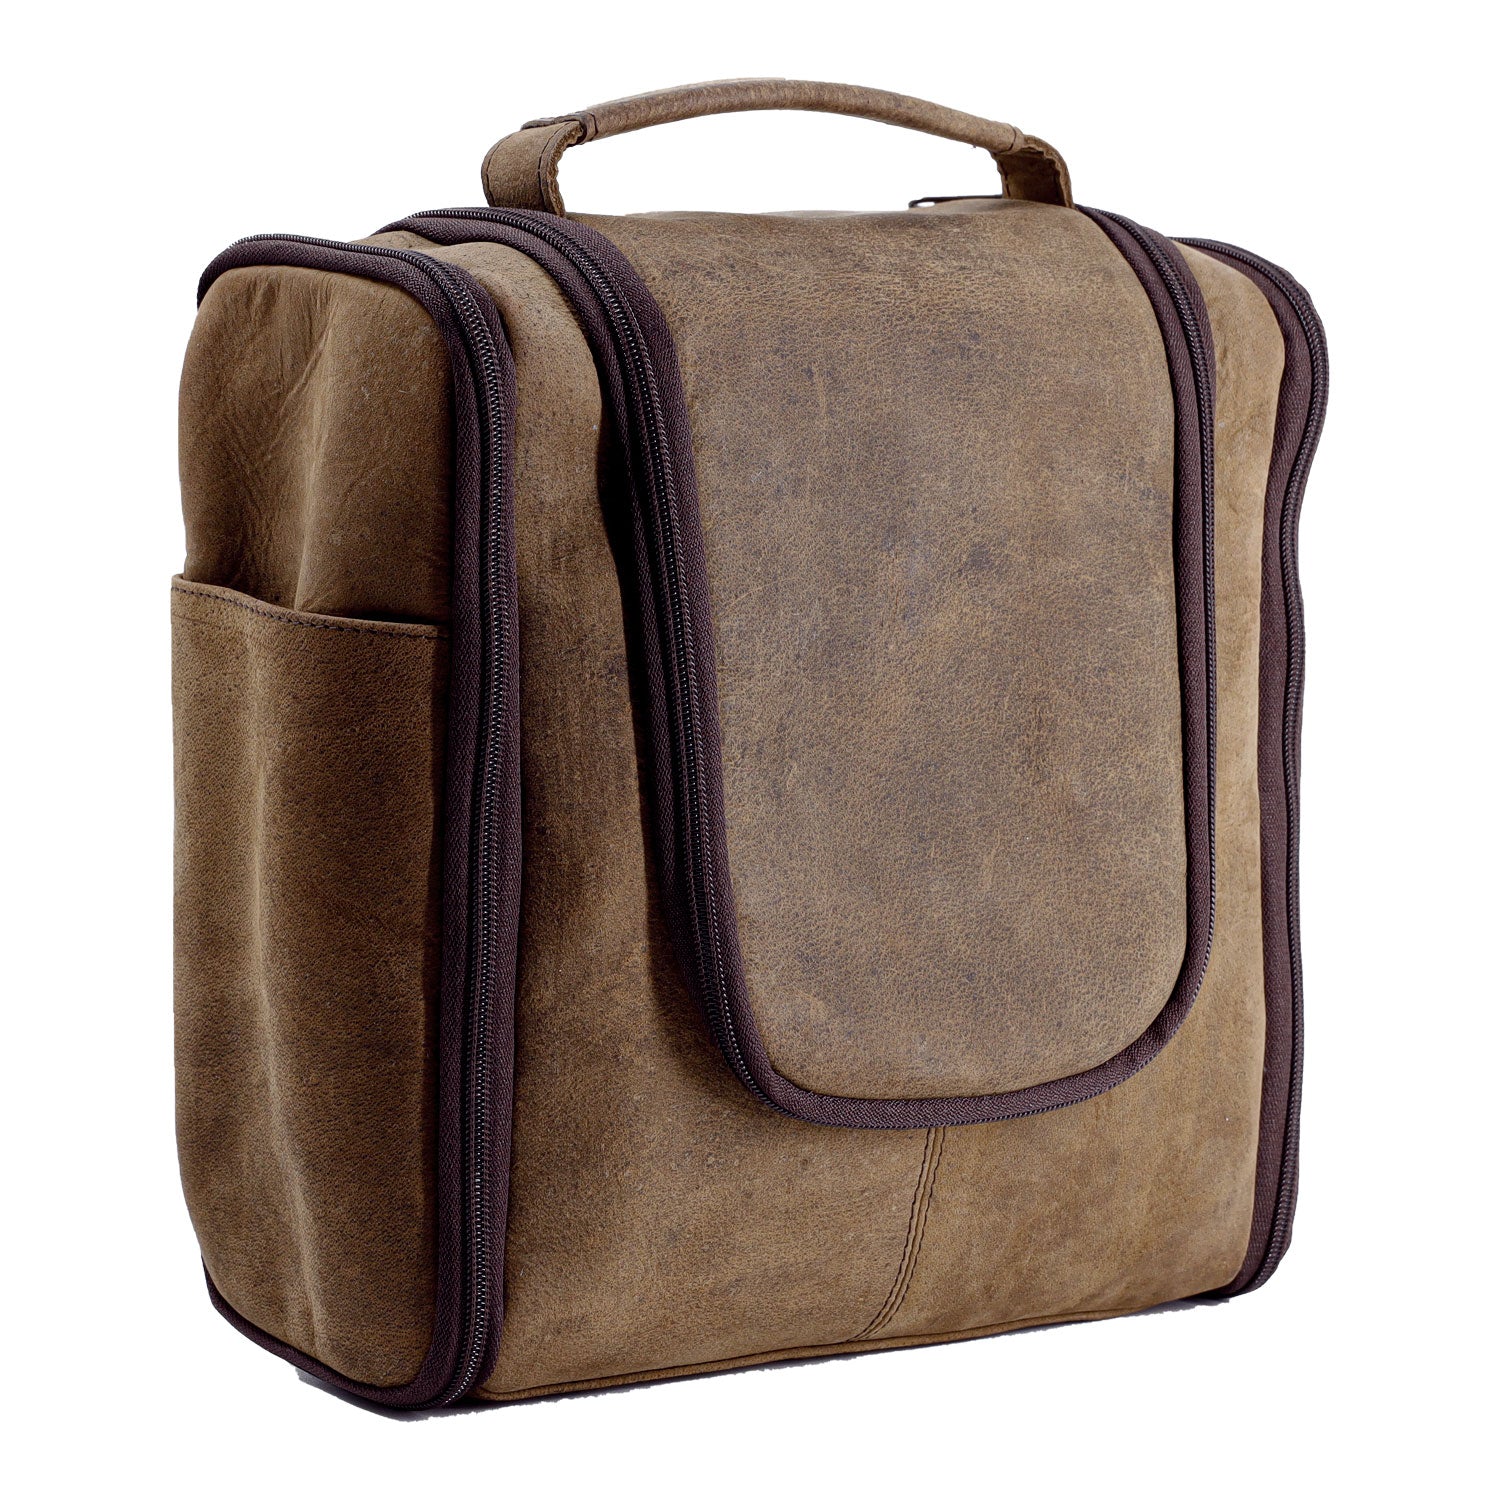 Leather toiletry bag for travel shave kit Bathroom Accessories hygiene Doop  Kit4 | eBay